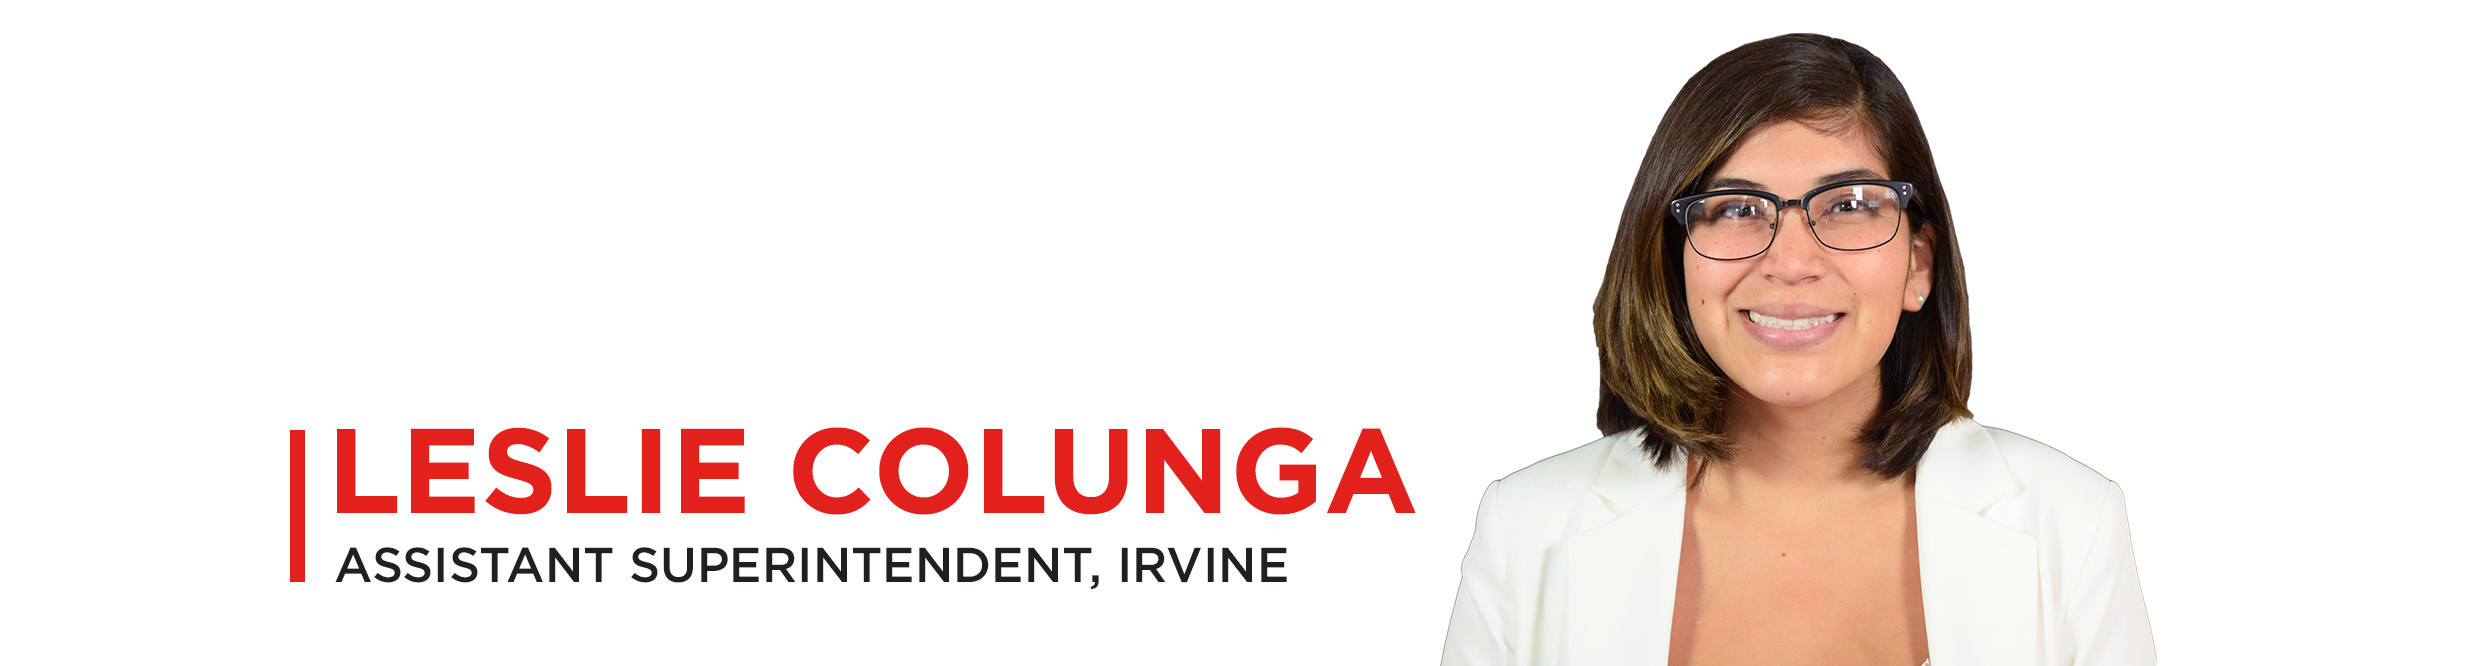 Leslie Colunga - Assistant Superintendent, Irvine